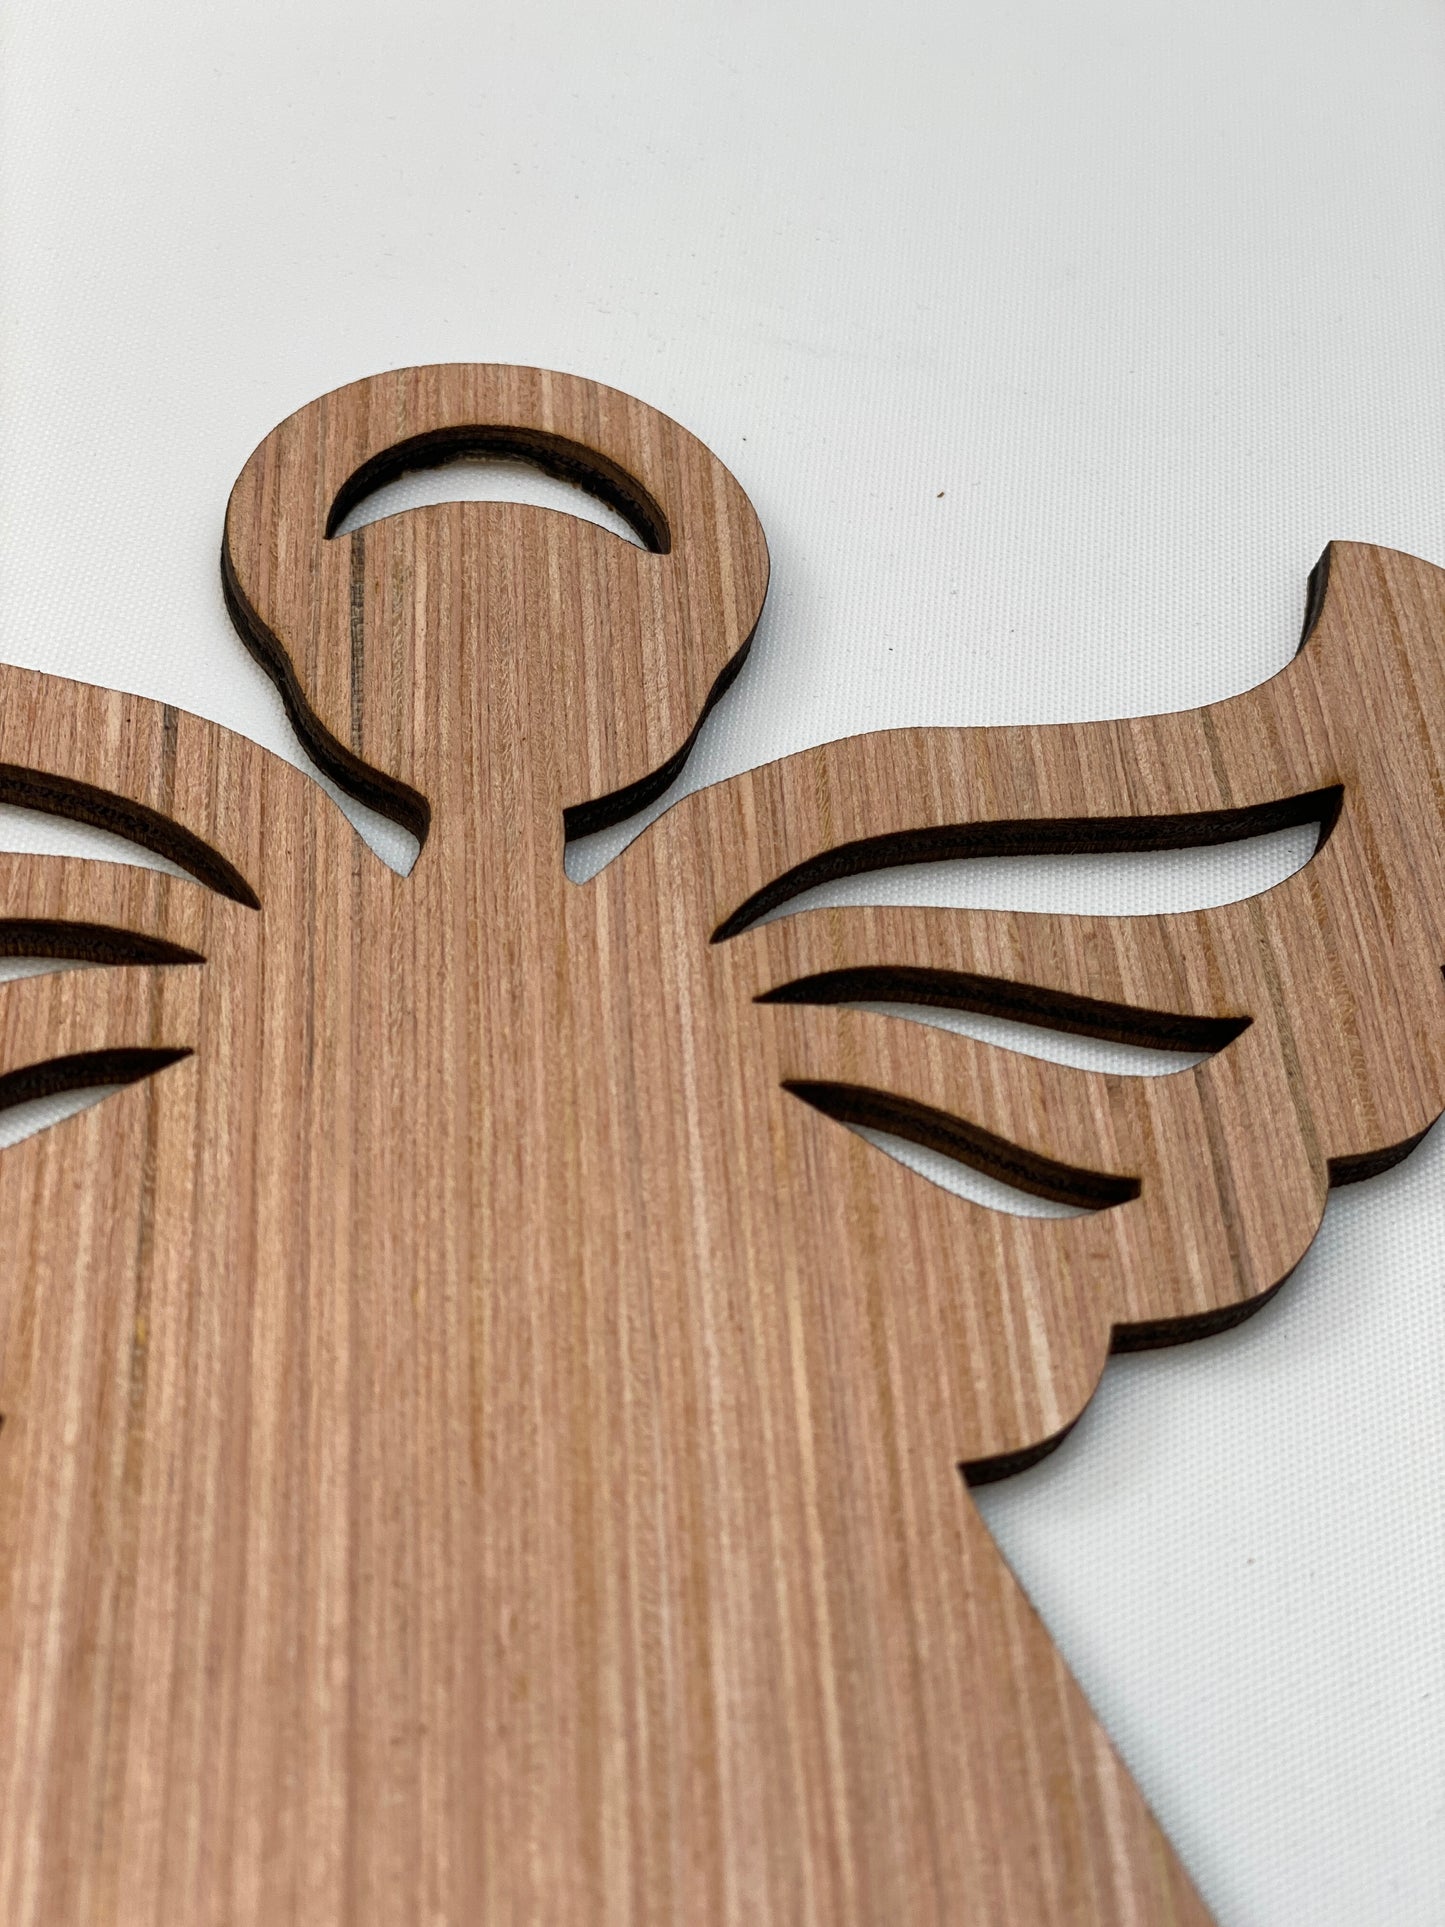 Angel Laser Cut / Engraved Wooden Blank